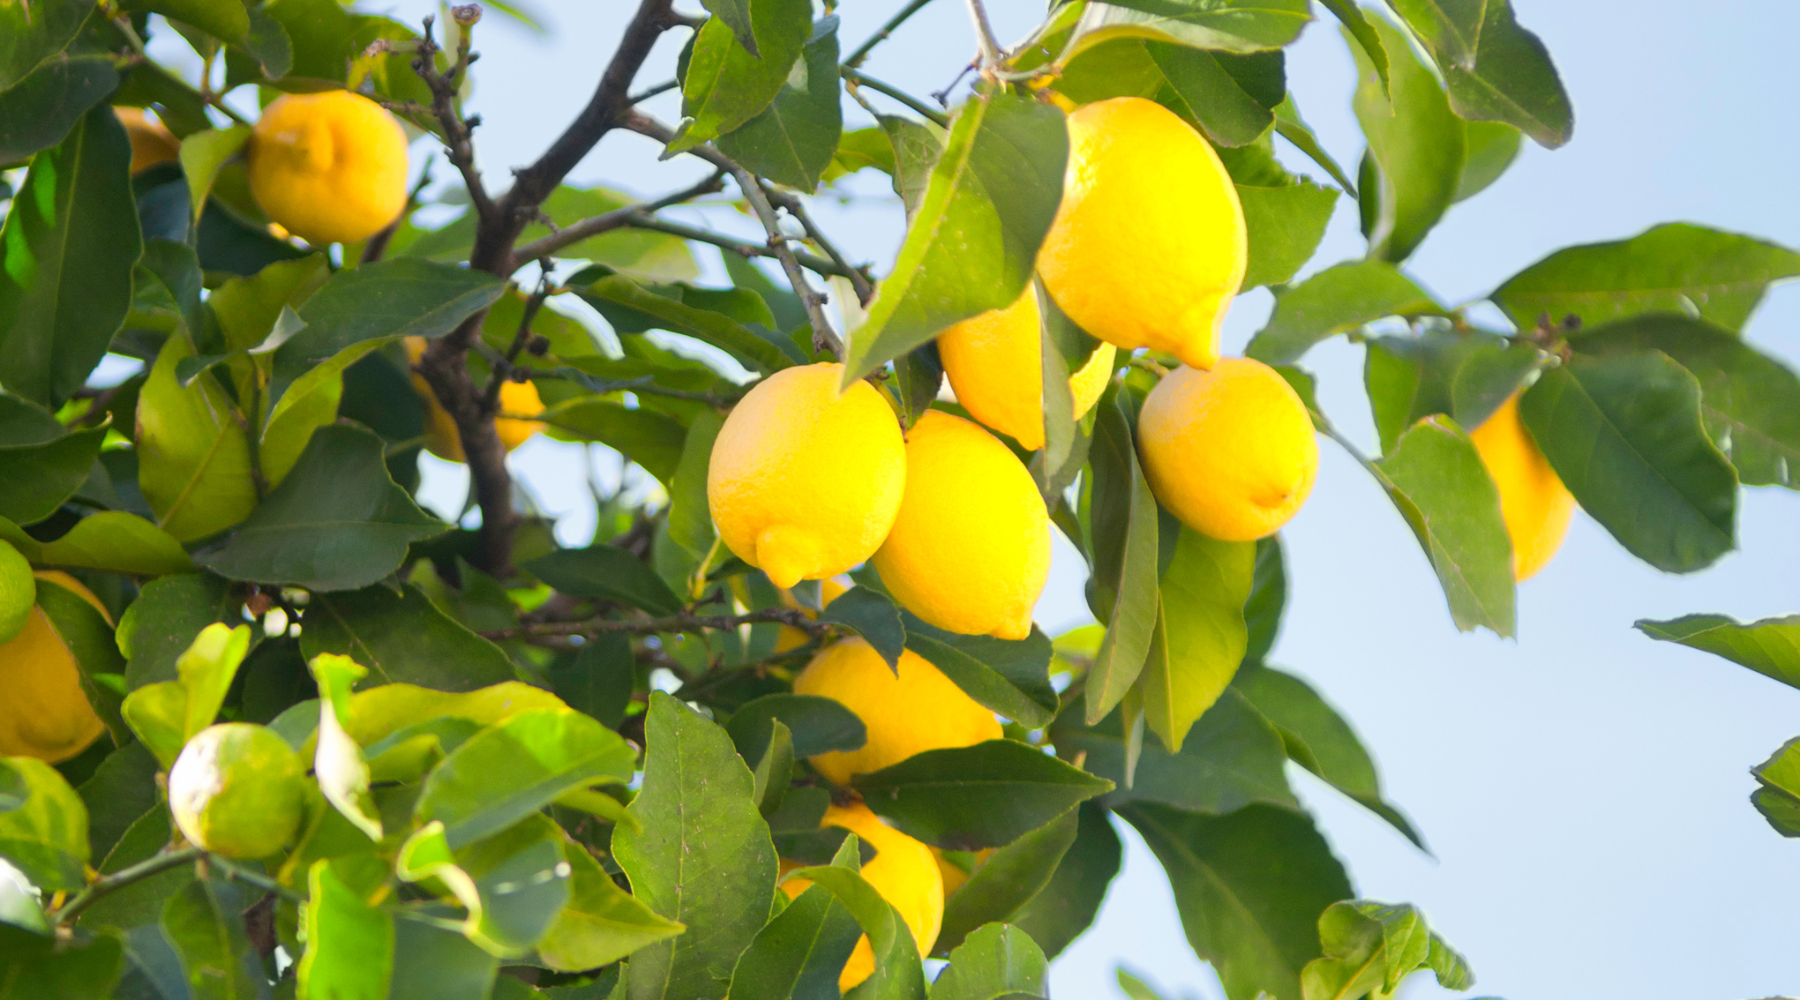 How to Properly Plant a Lemon Tree